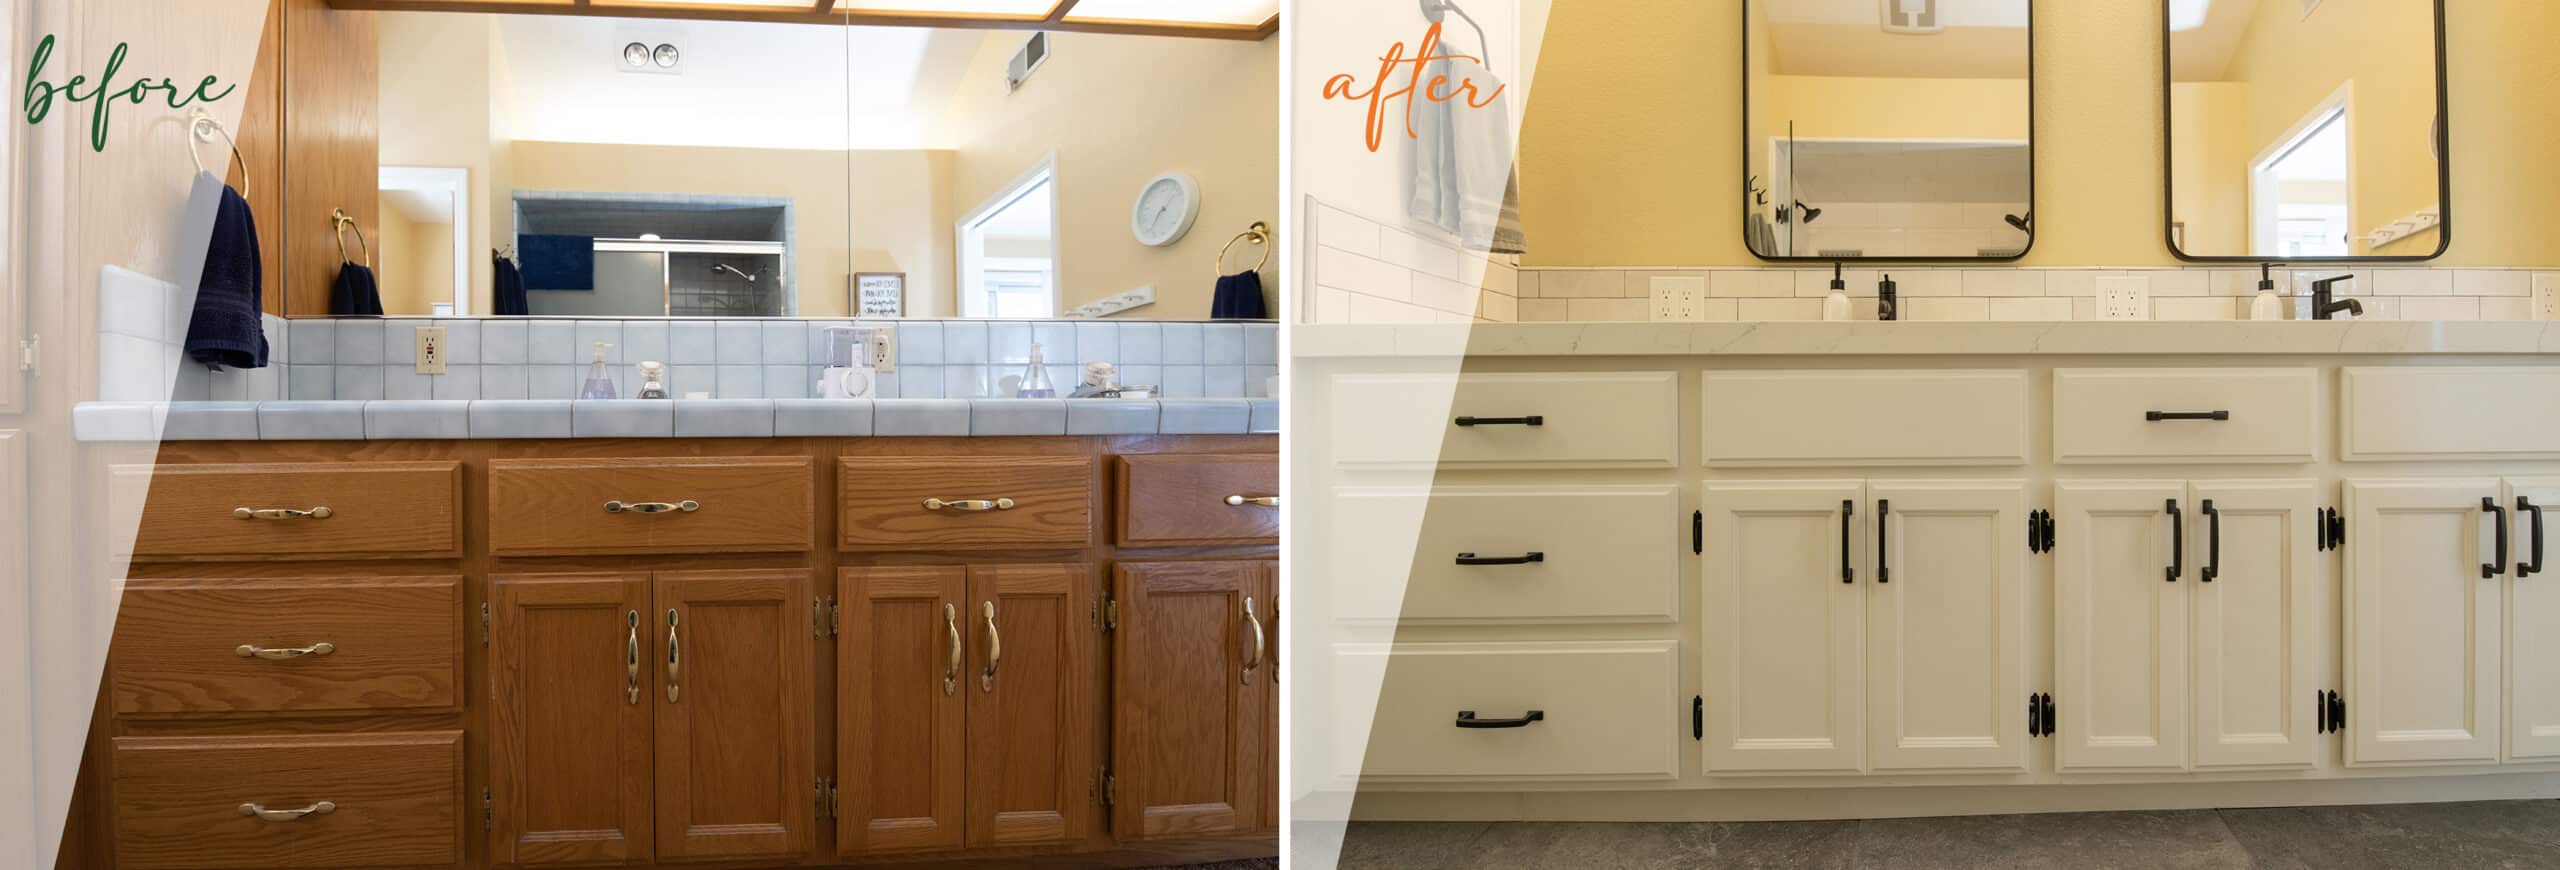 Before & After Bathroom Remodel 